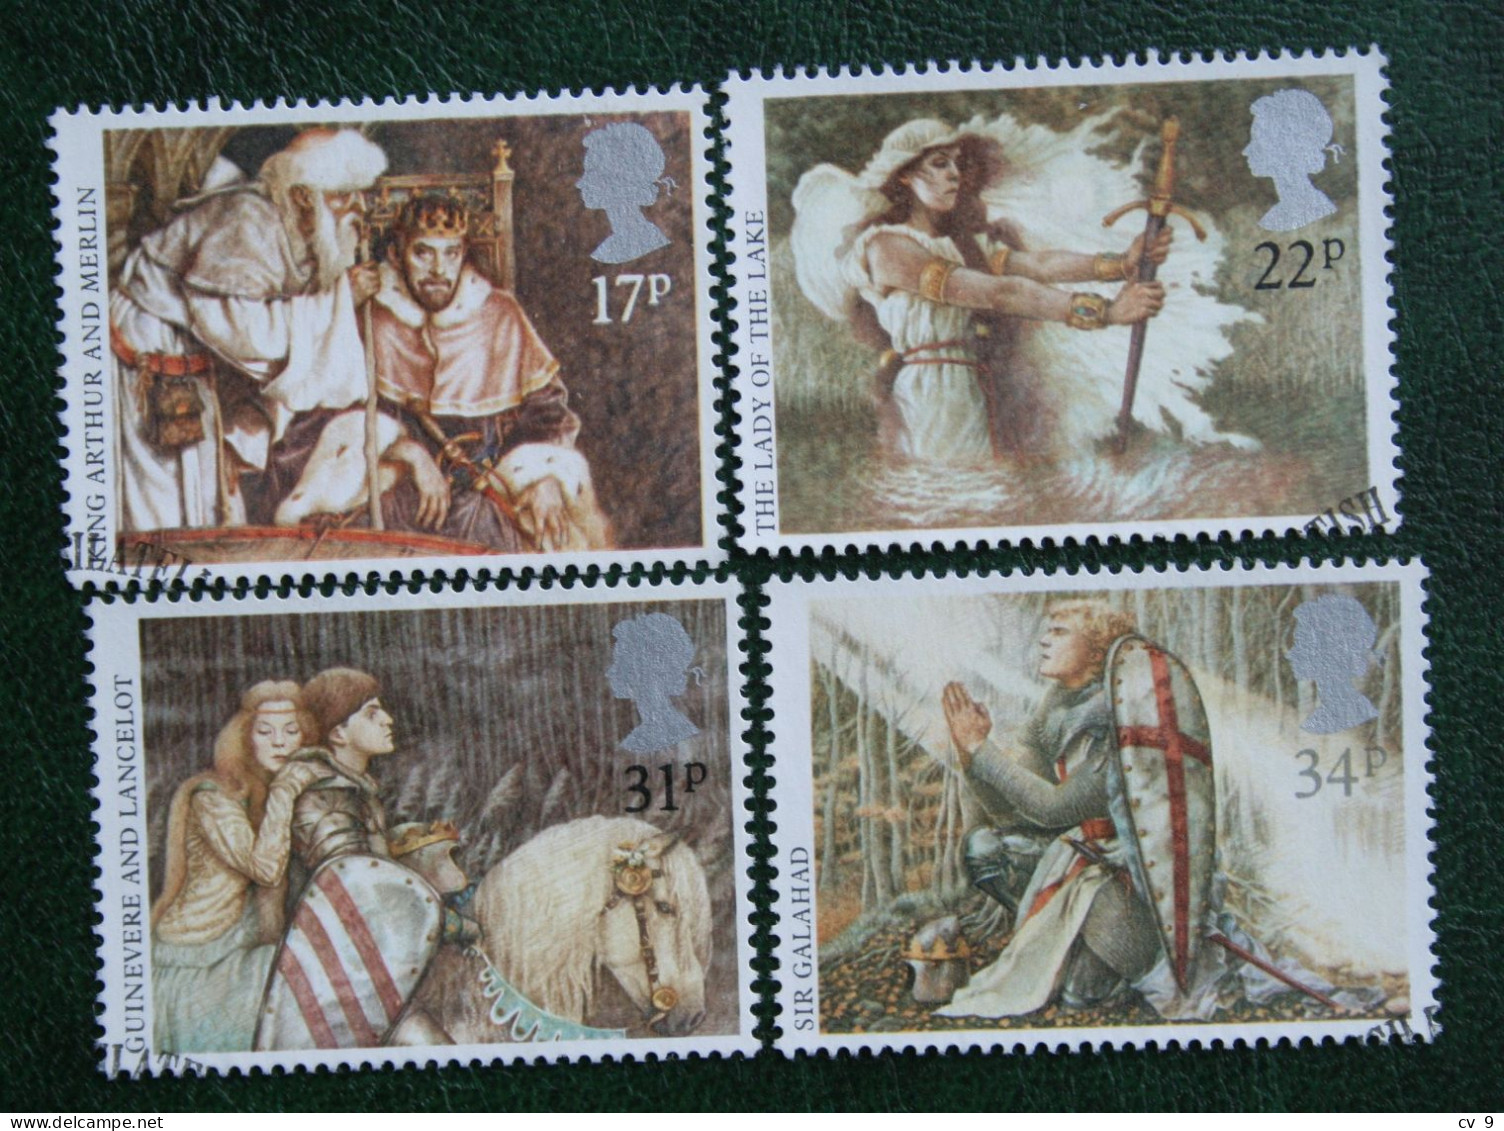 ARTHURIAN LEGENDS (Mi 1039-1042) 1985 Used Gebruikt Oblitere ENGLAND GRANDE-BRETAGNE GB GREAT BRITAIN - Used Stamps